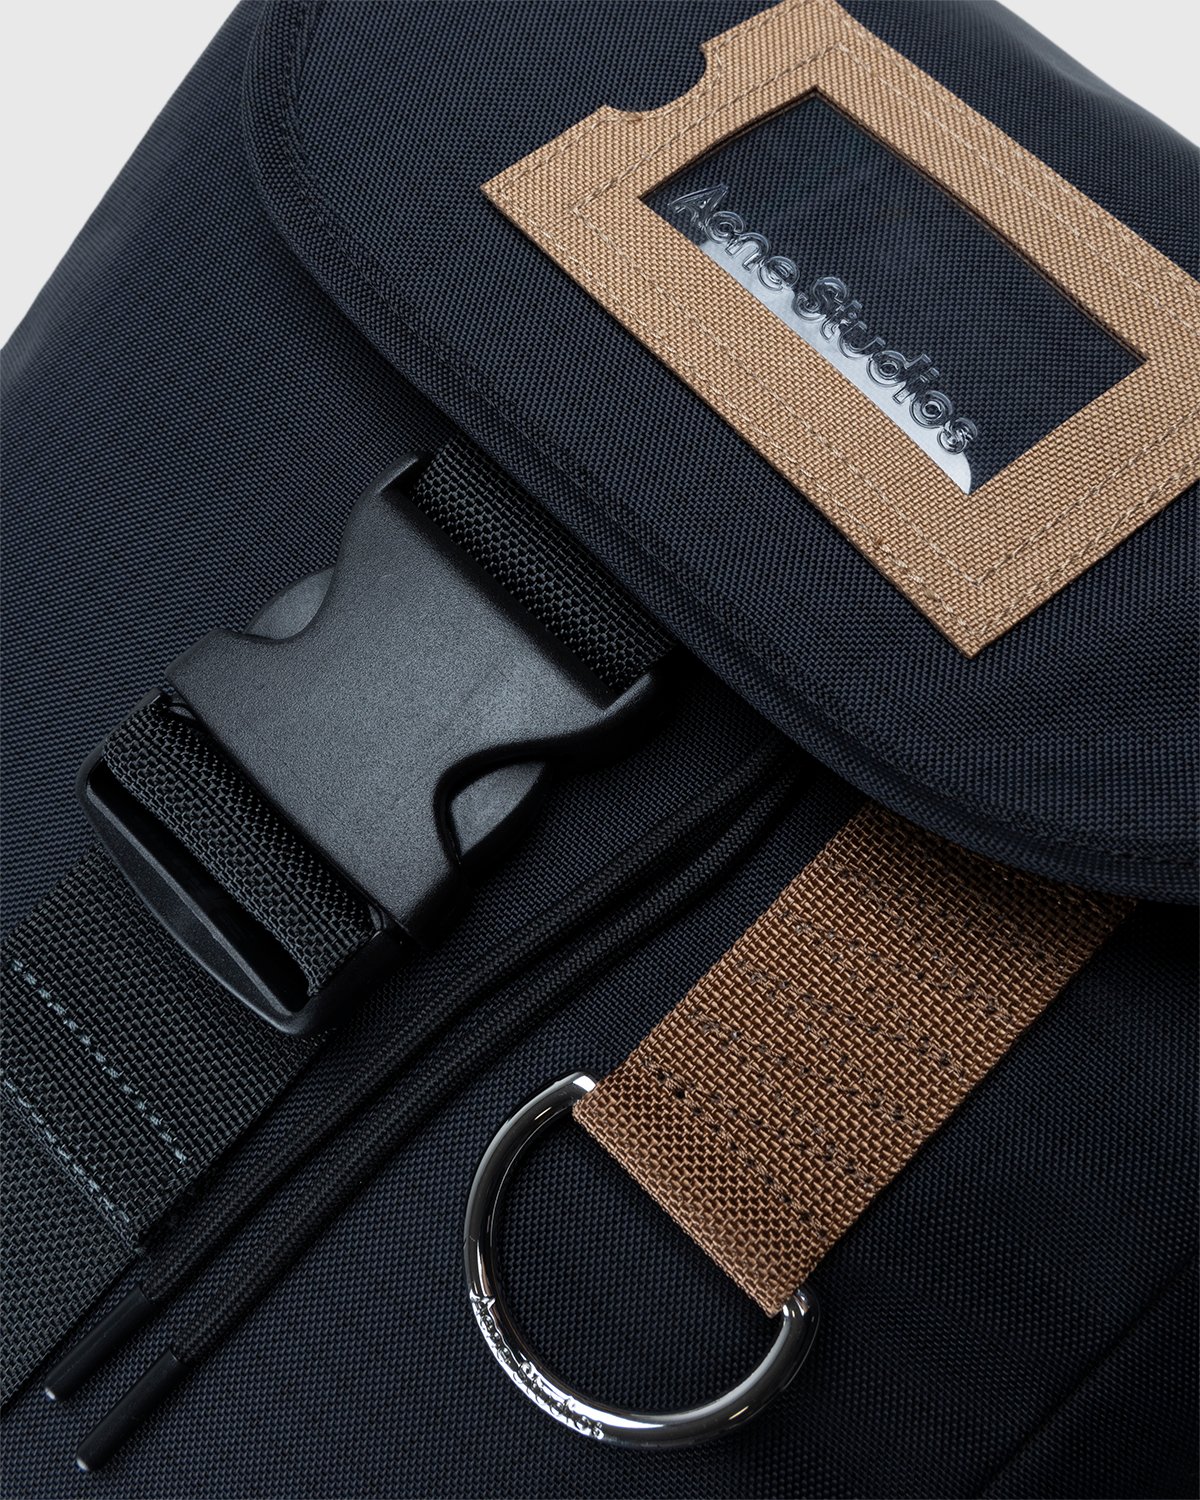 Acne Studios - Ripstop Nylon Backpack Black - Accessories - Black - Image 5